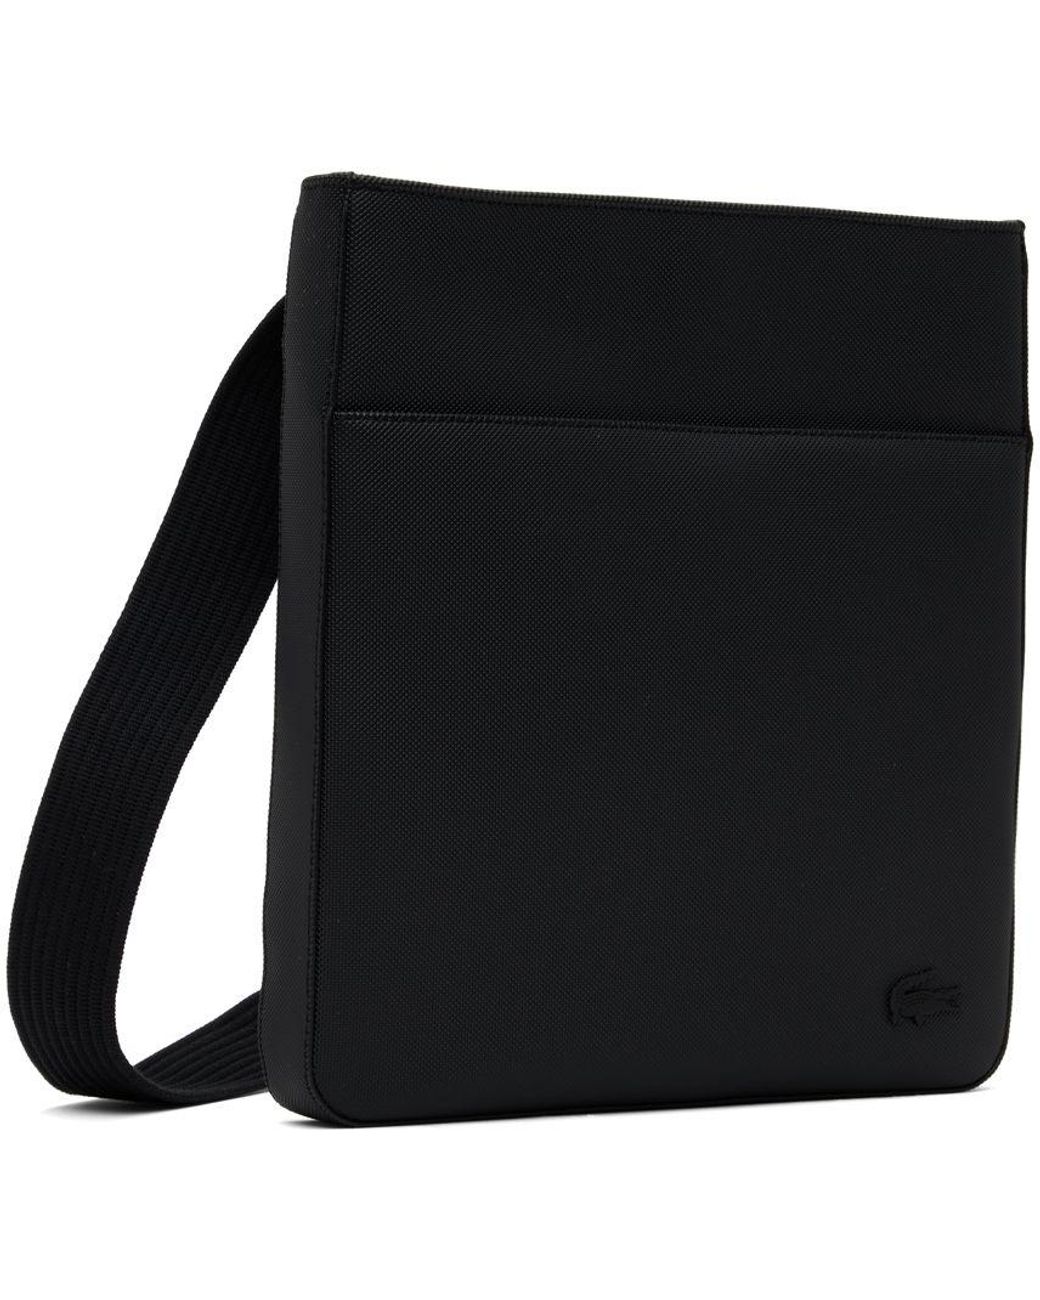 Lacoste Black Classic Petit Flat Bag for Men | Lyst